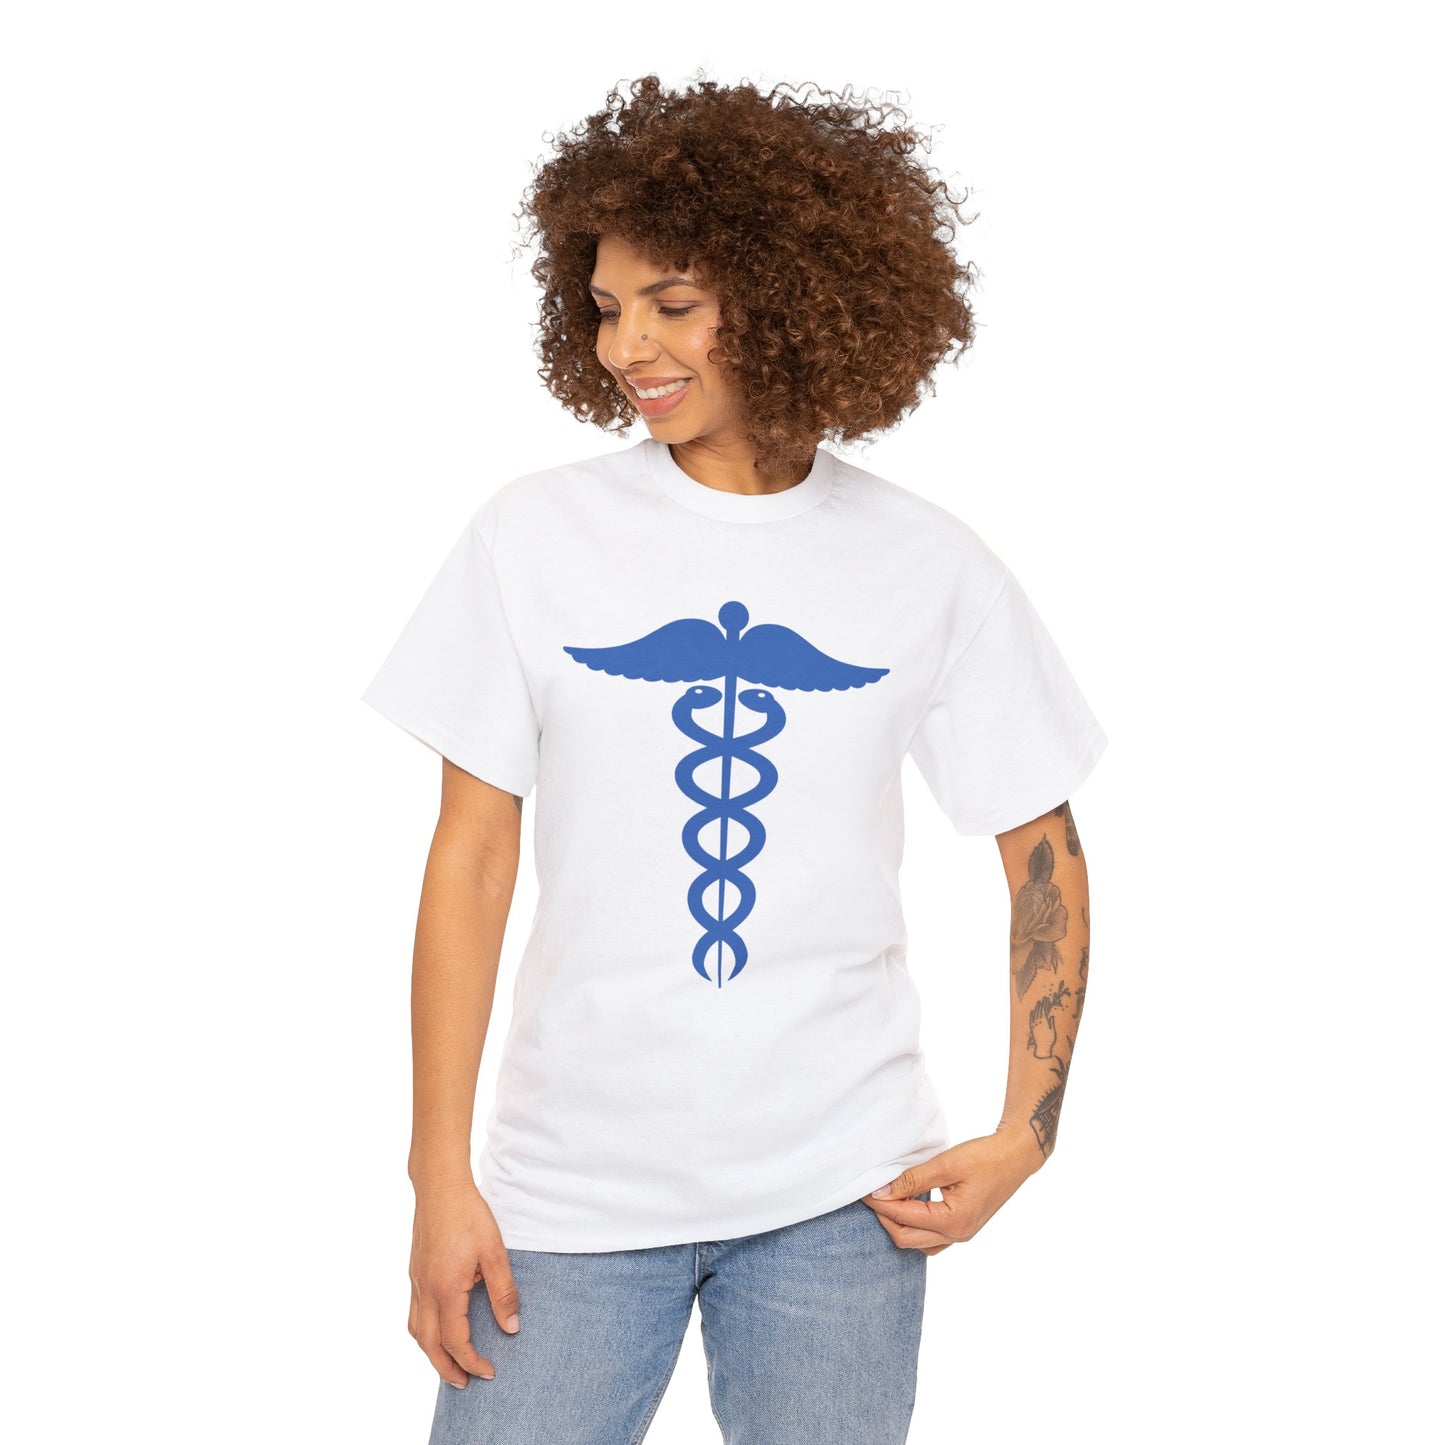 Nurse / Medical Caduceus Emblem - Adult Man or Woman Unisex Heavy Cotton Tee